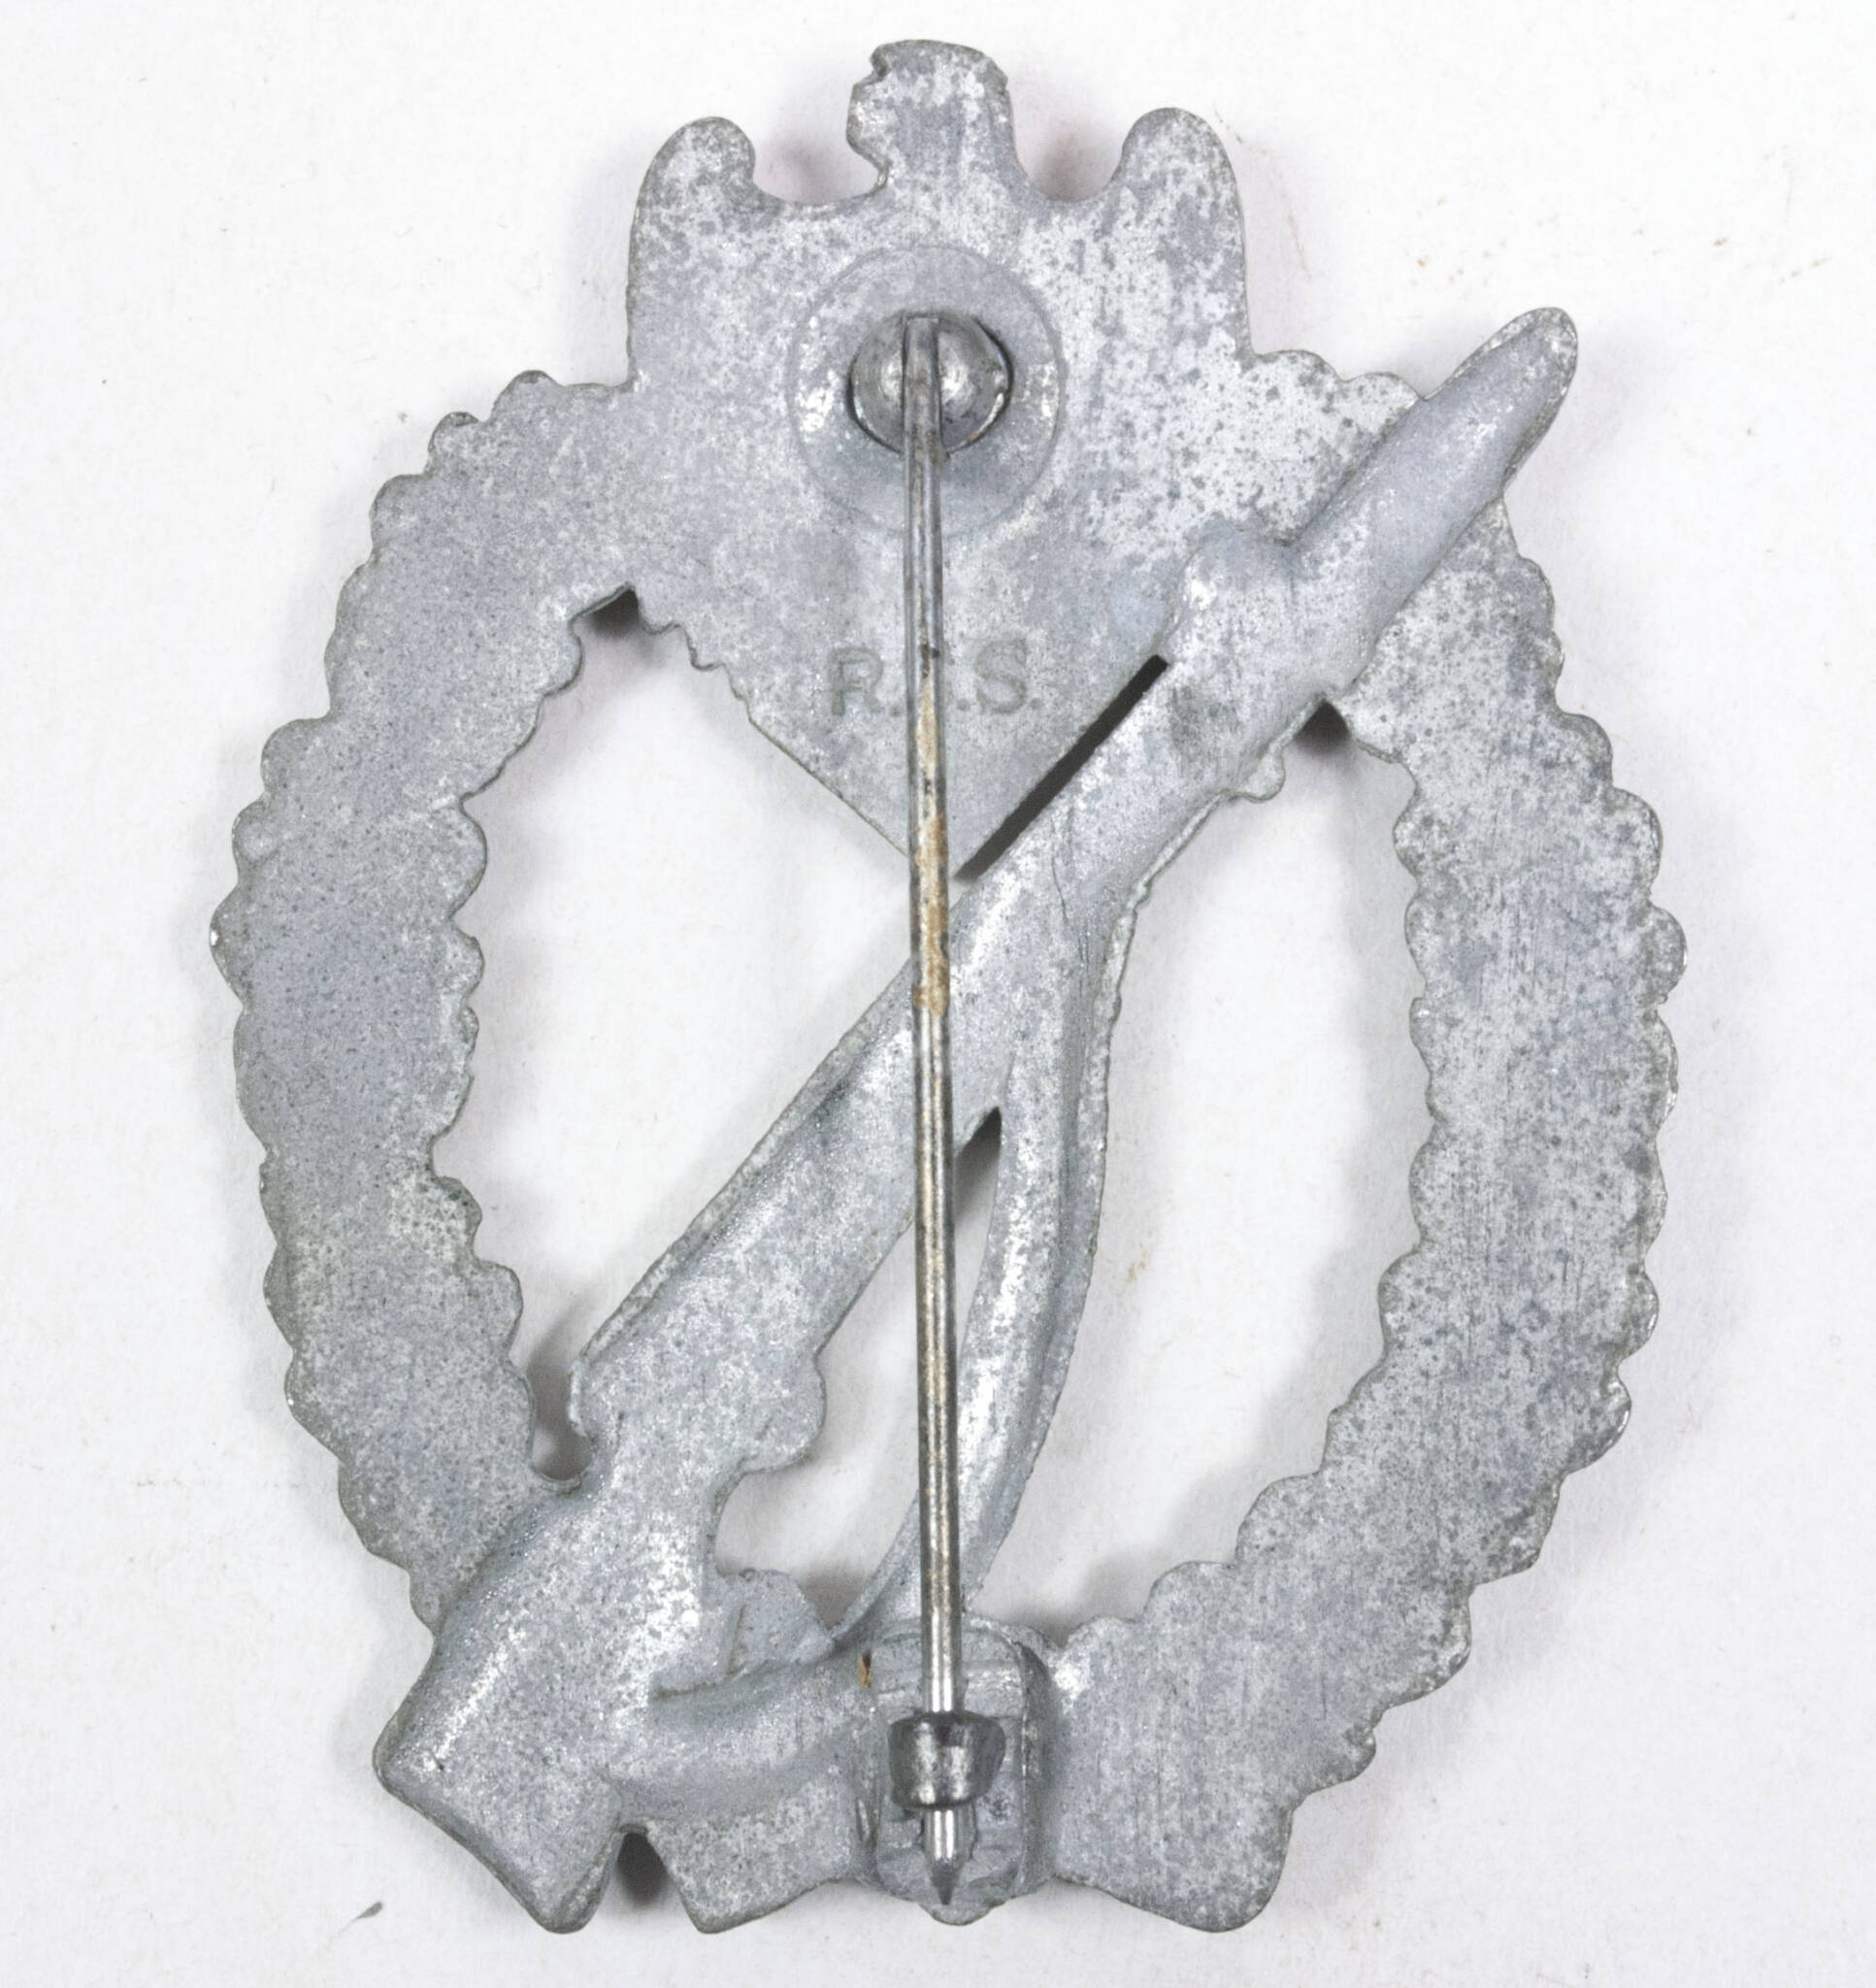 Infanterie Sturmabzeichen (ISA) bronze Infantry Assault Badge (IAB) (Maker RSS)